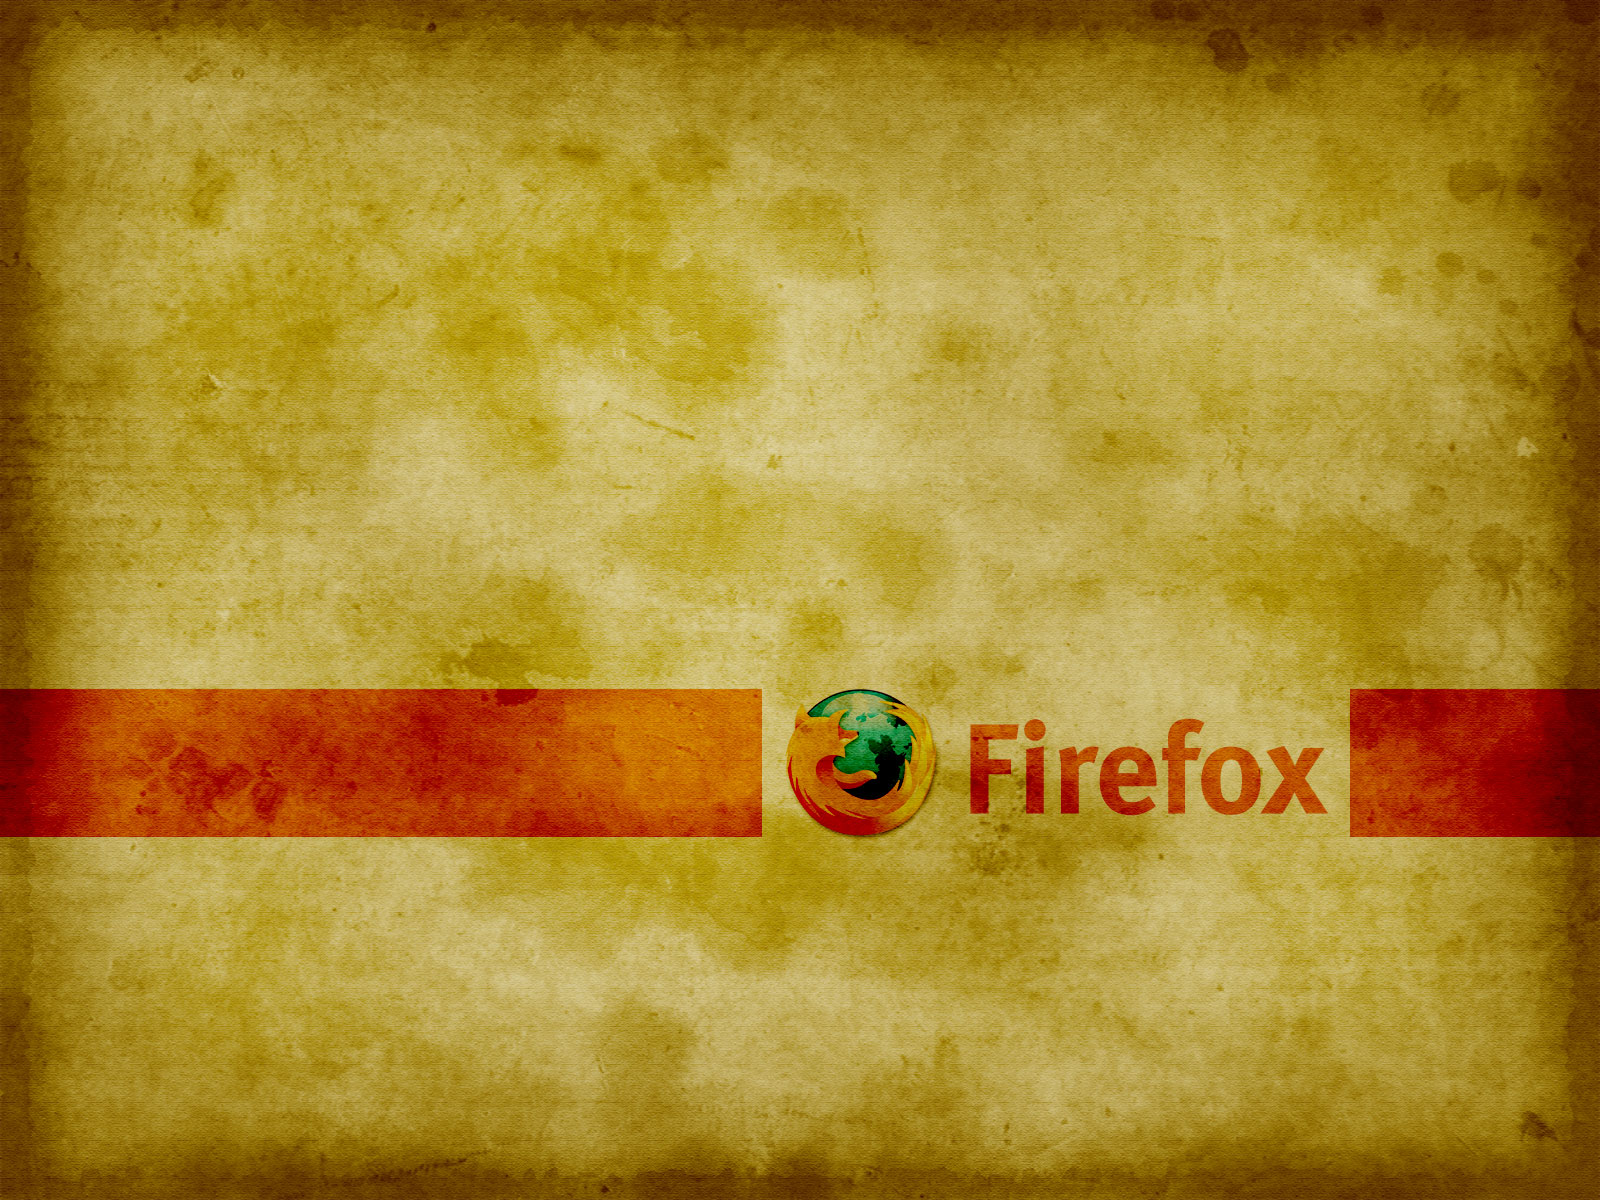 internet, technology, firefox, browser, mozilla